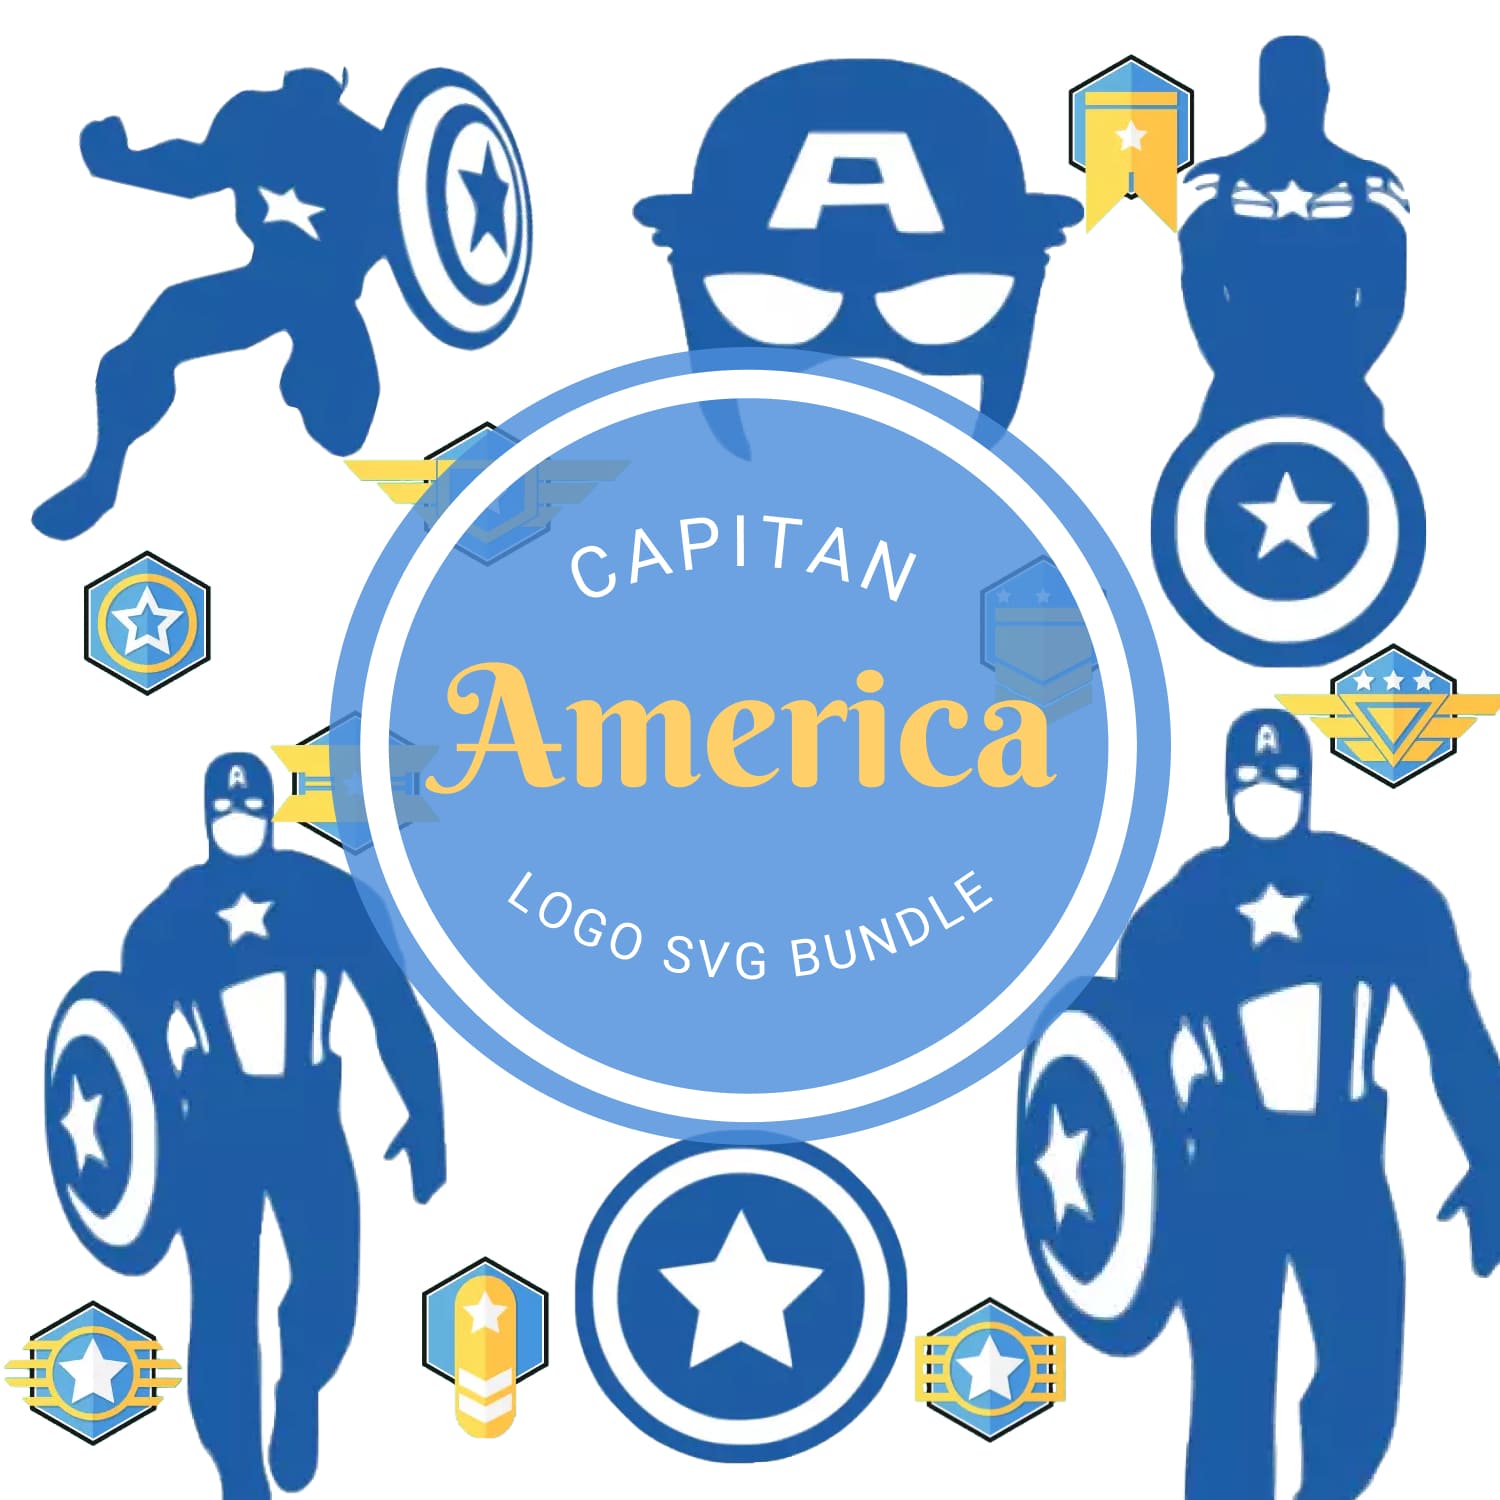 Captain america logo svg bundle, first picture 1500x1500.